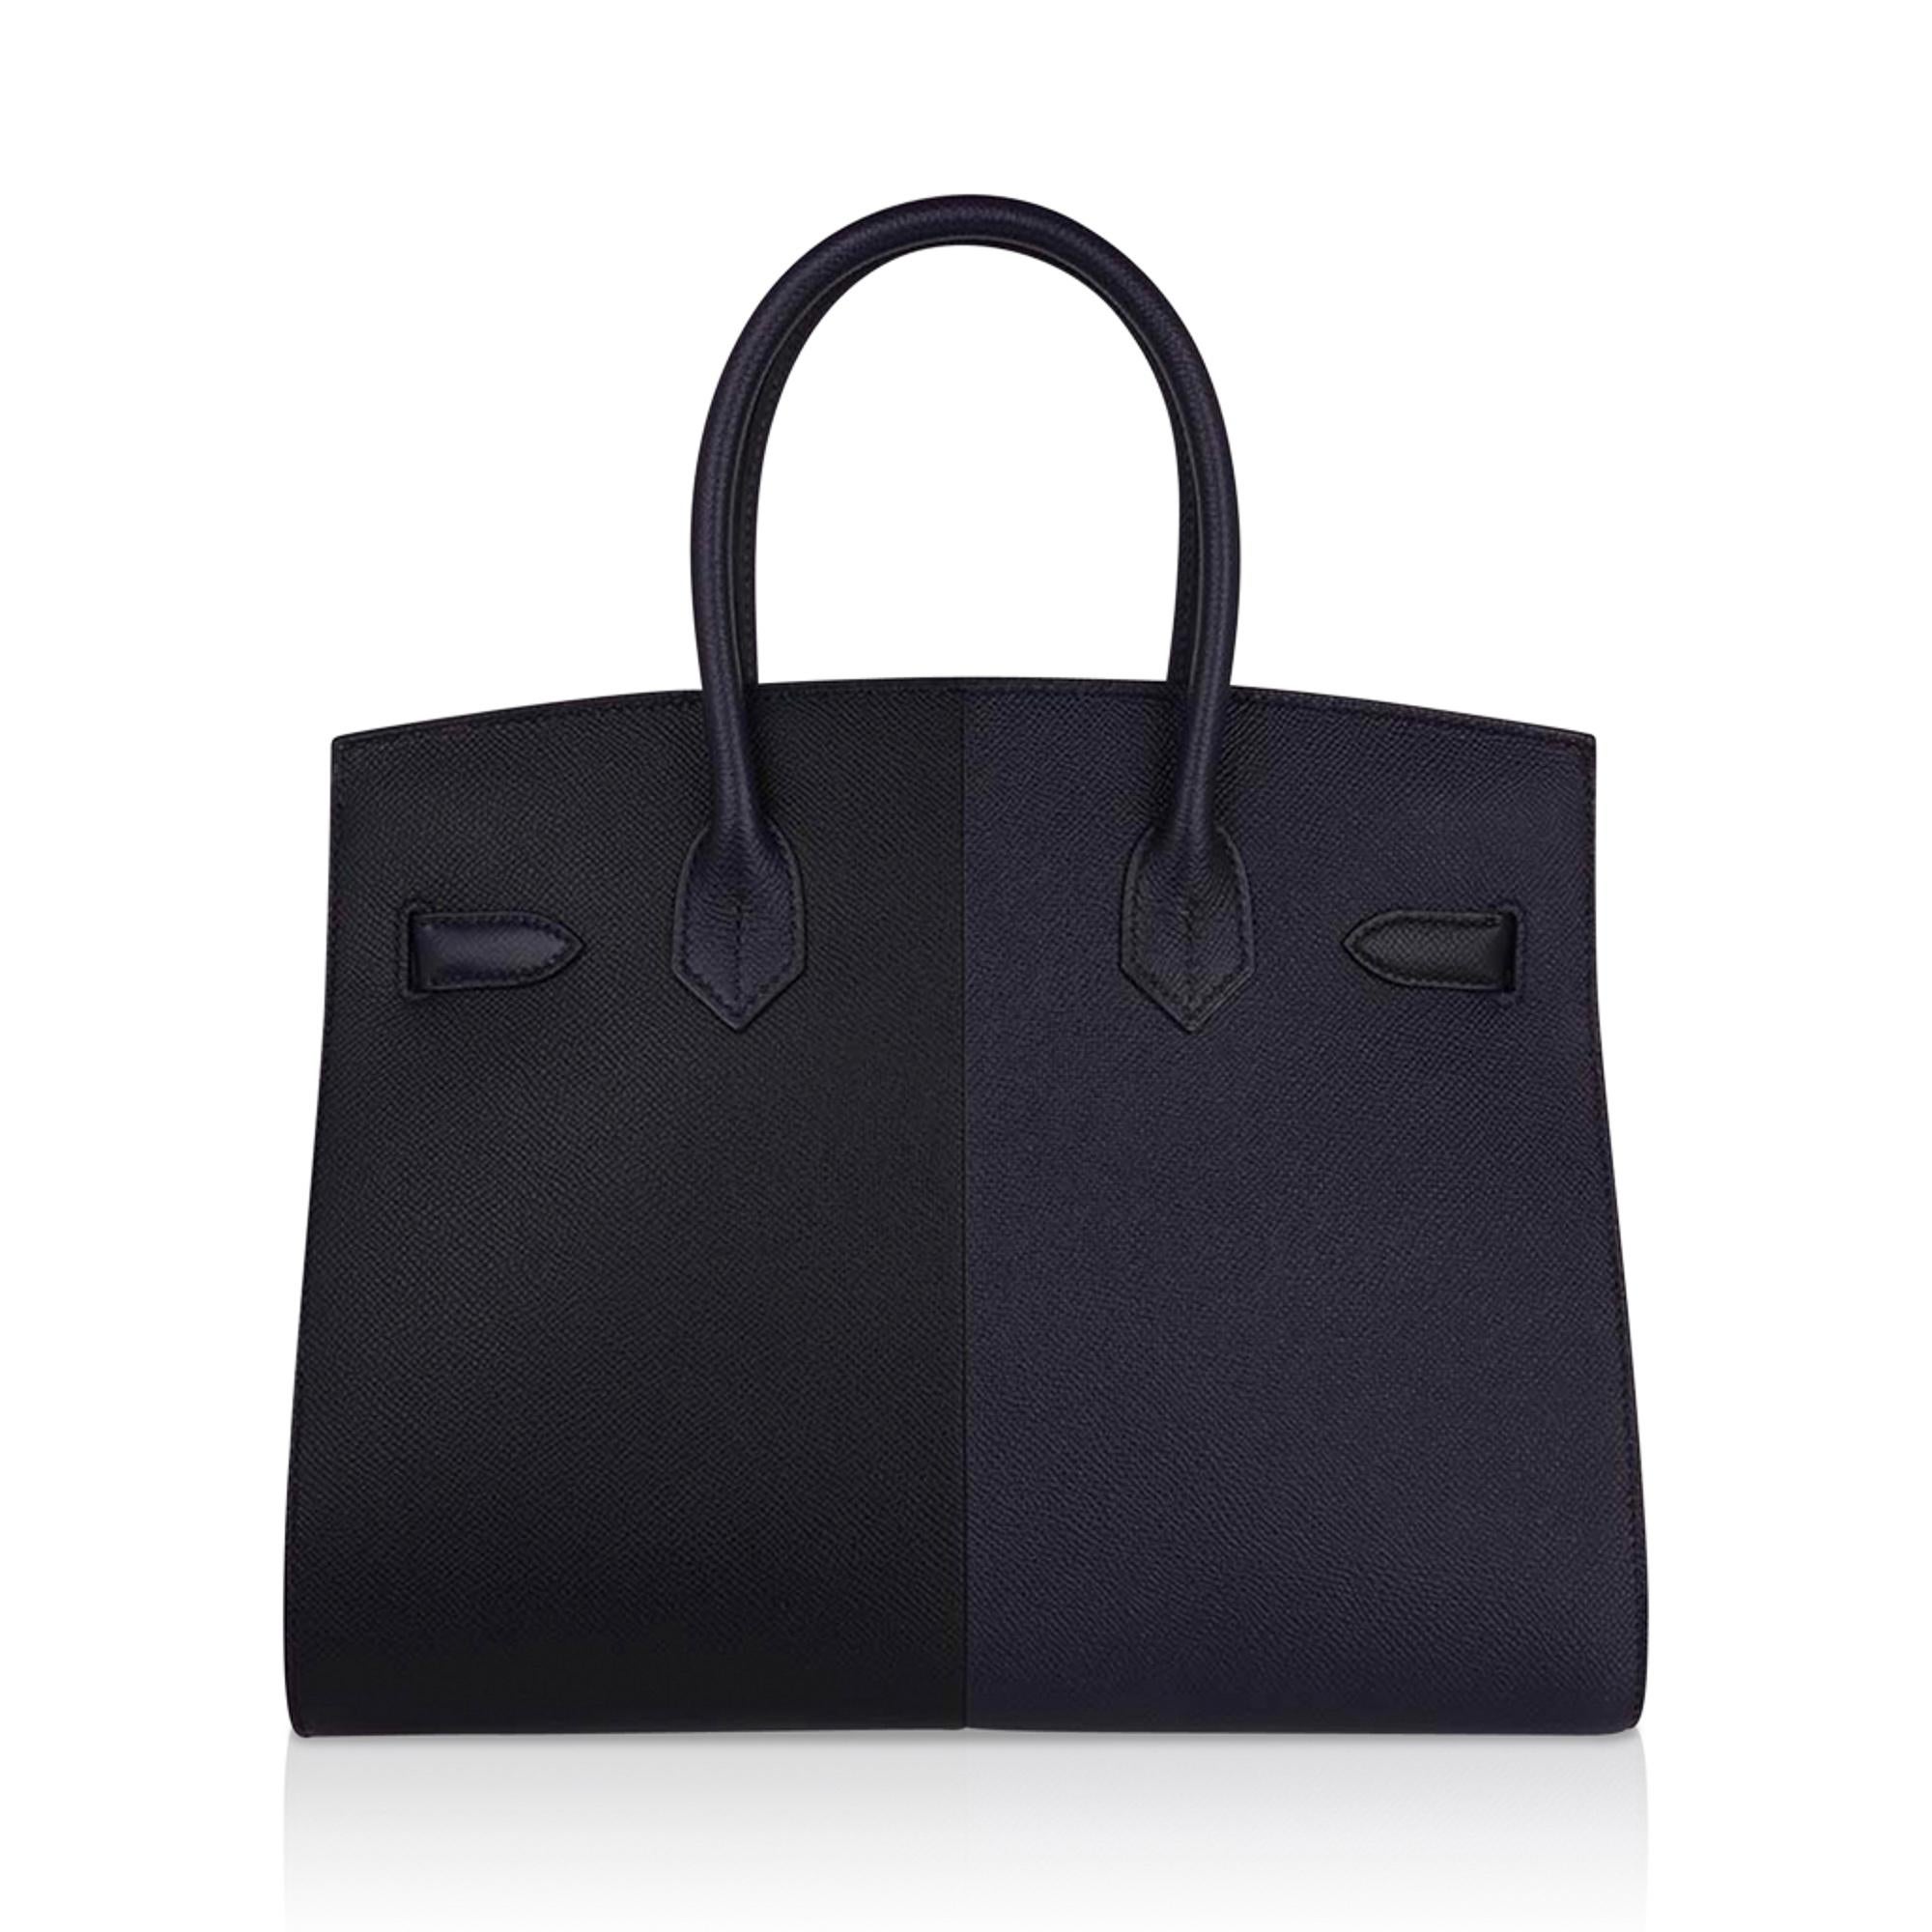 Hermes Birkin Sellier 30 Casaque Noir / Bleu Indigo / Bleu Frida Bag Epsom Gold  For Sale 1